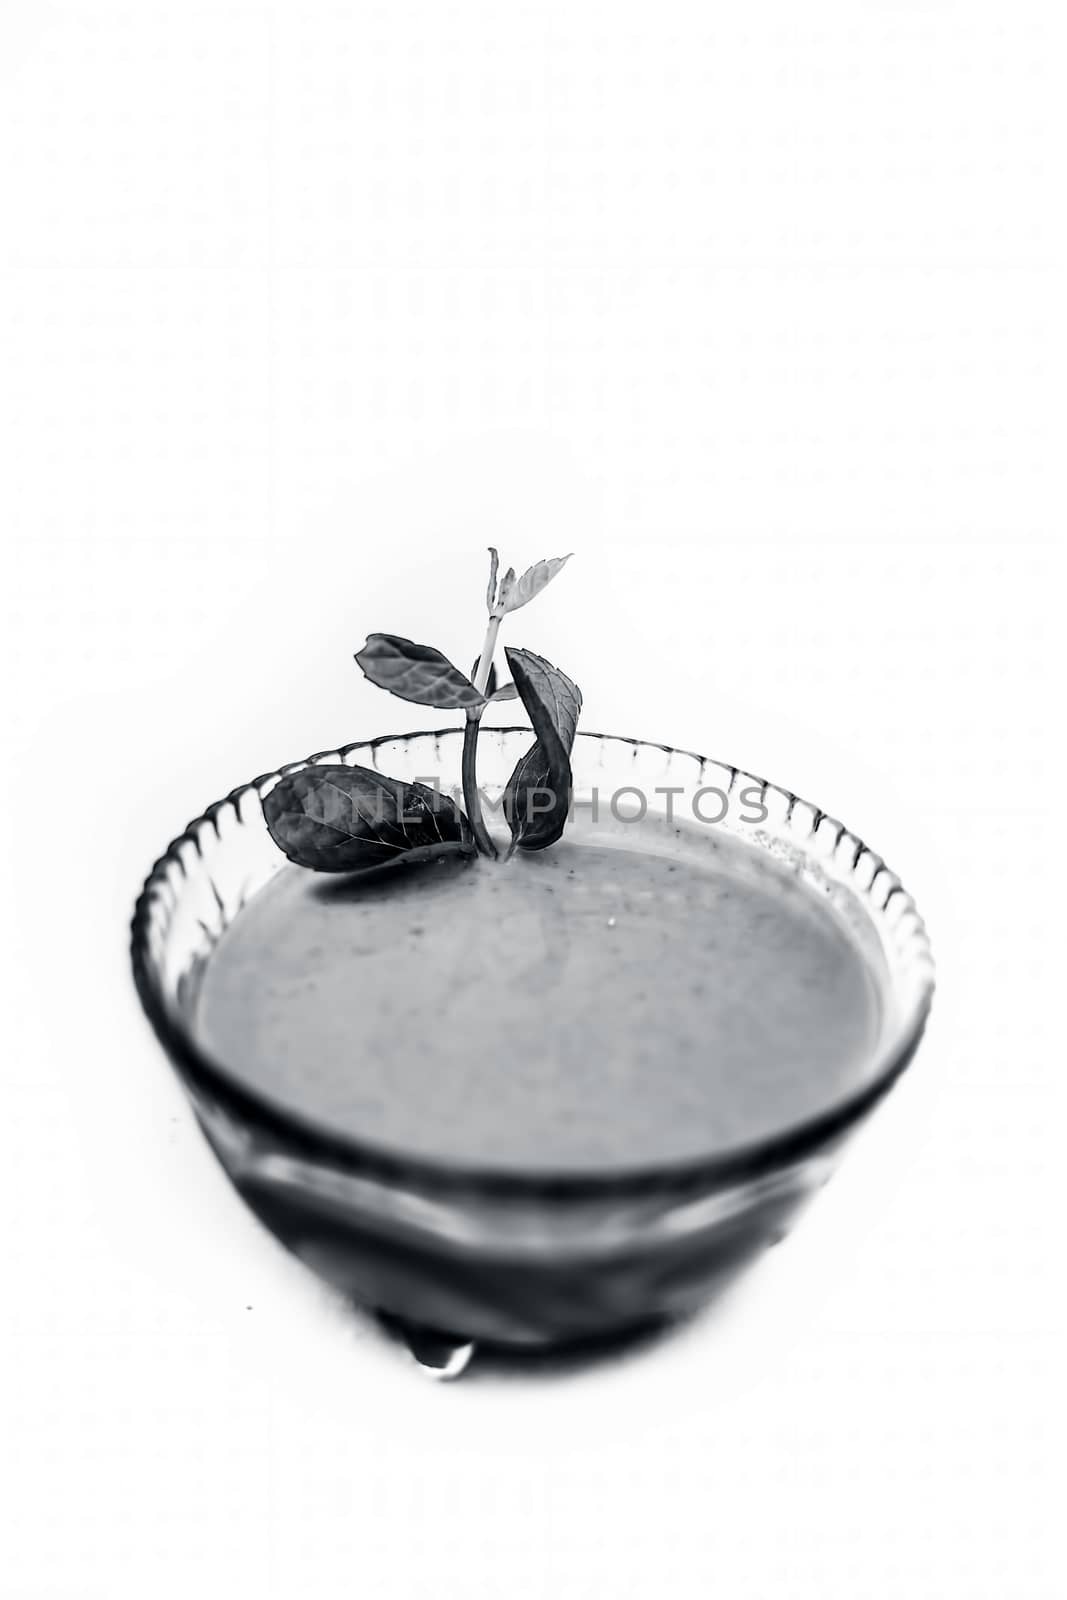 Close up shot of popular Indian sauce or chutney i.e. Phudina ki chutney isolated on white in a transparent glass bowl.